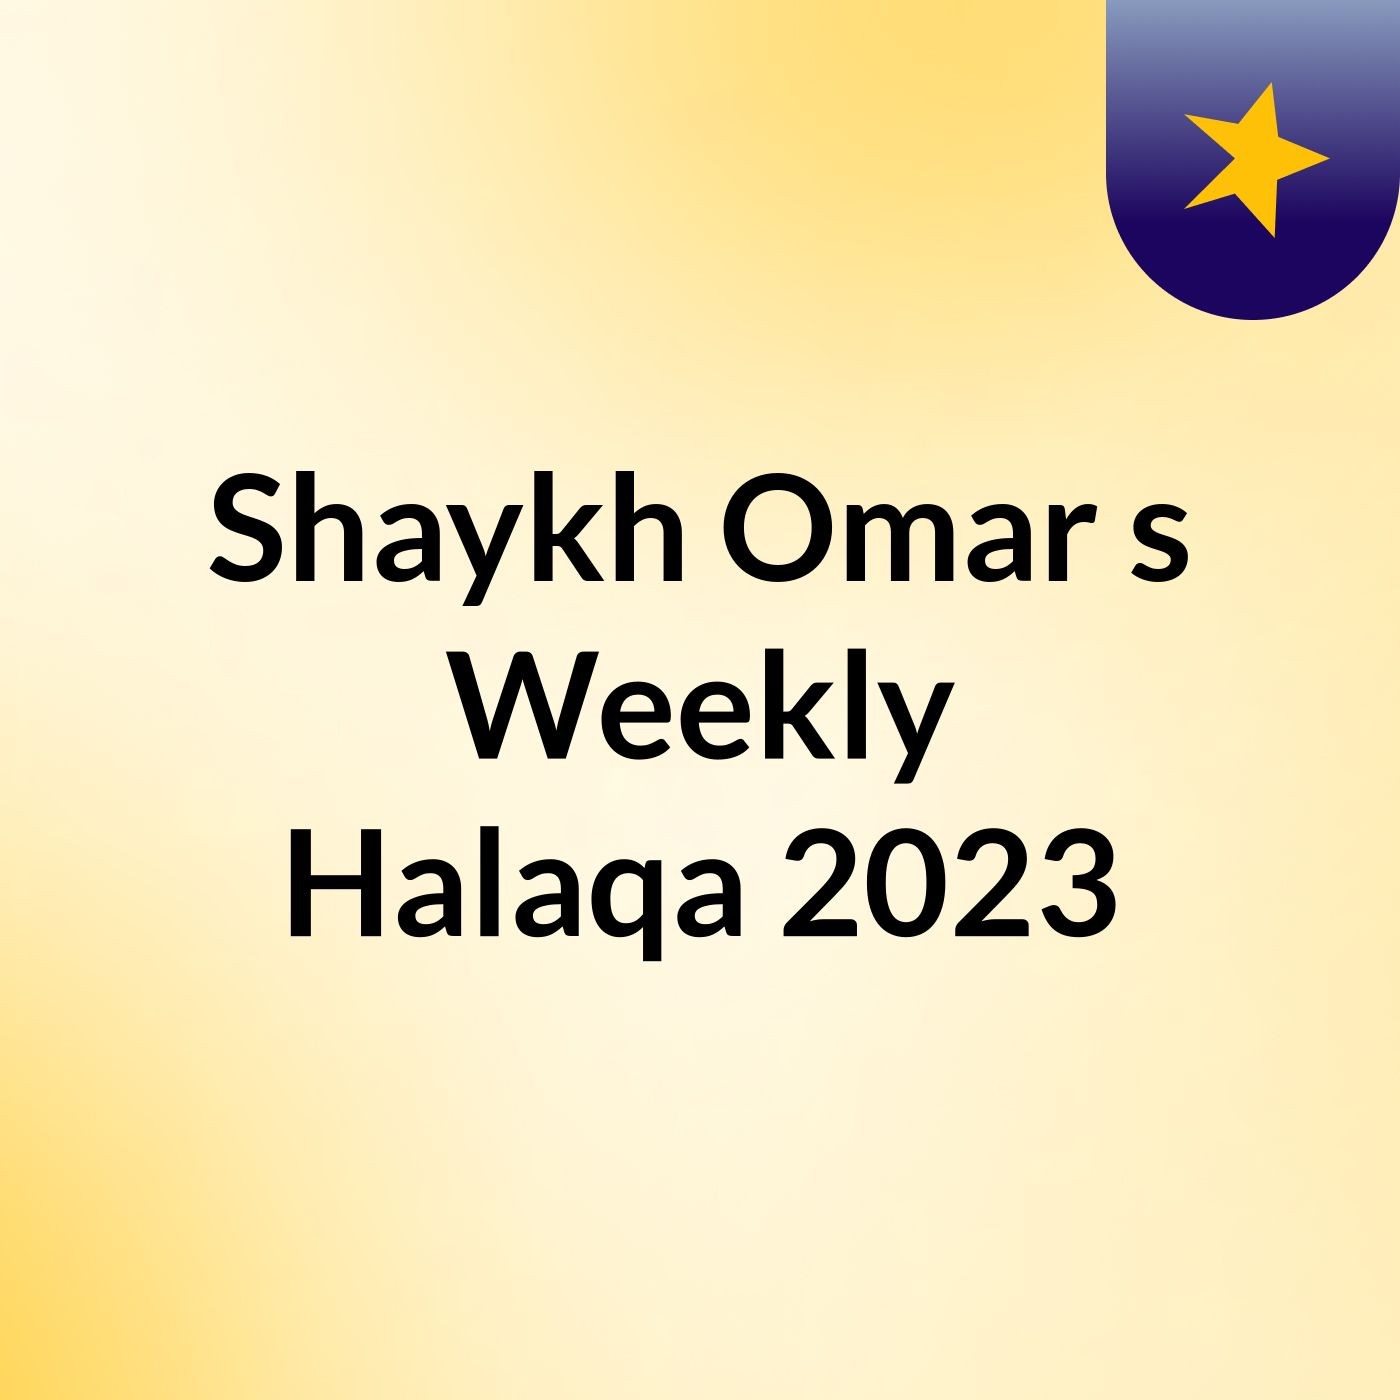 Shaykh Omar’s Weekly Halaqa 2023